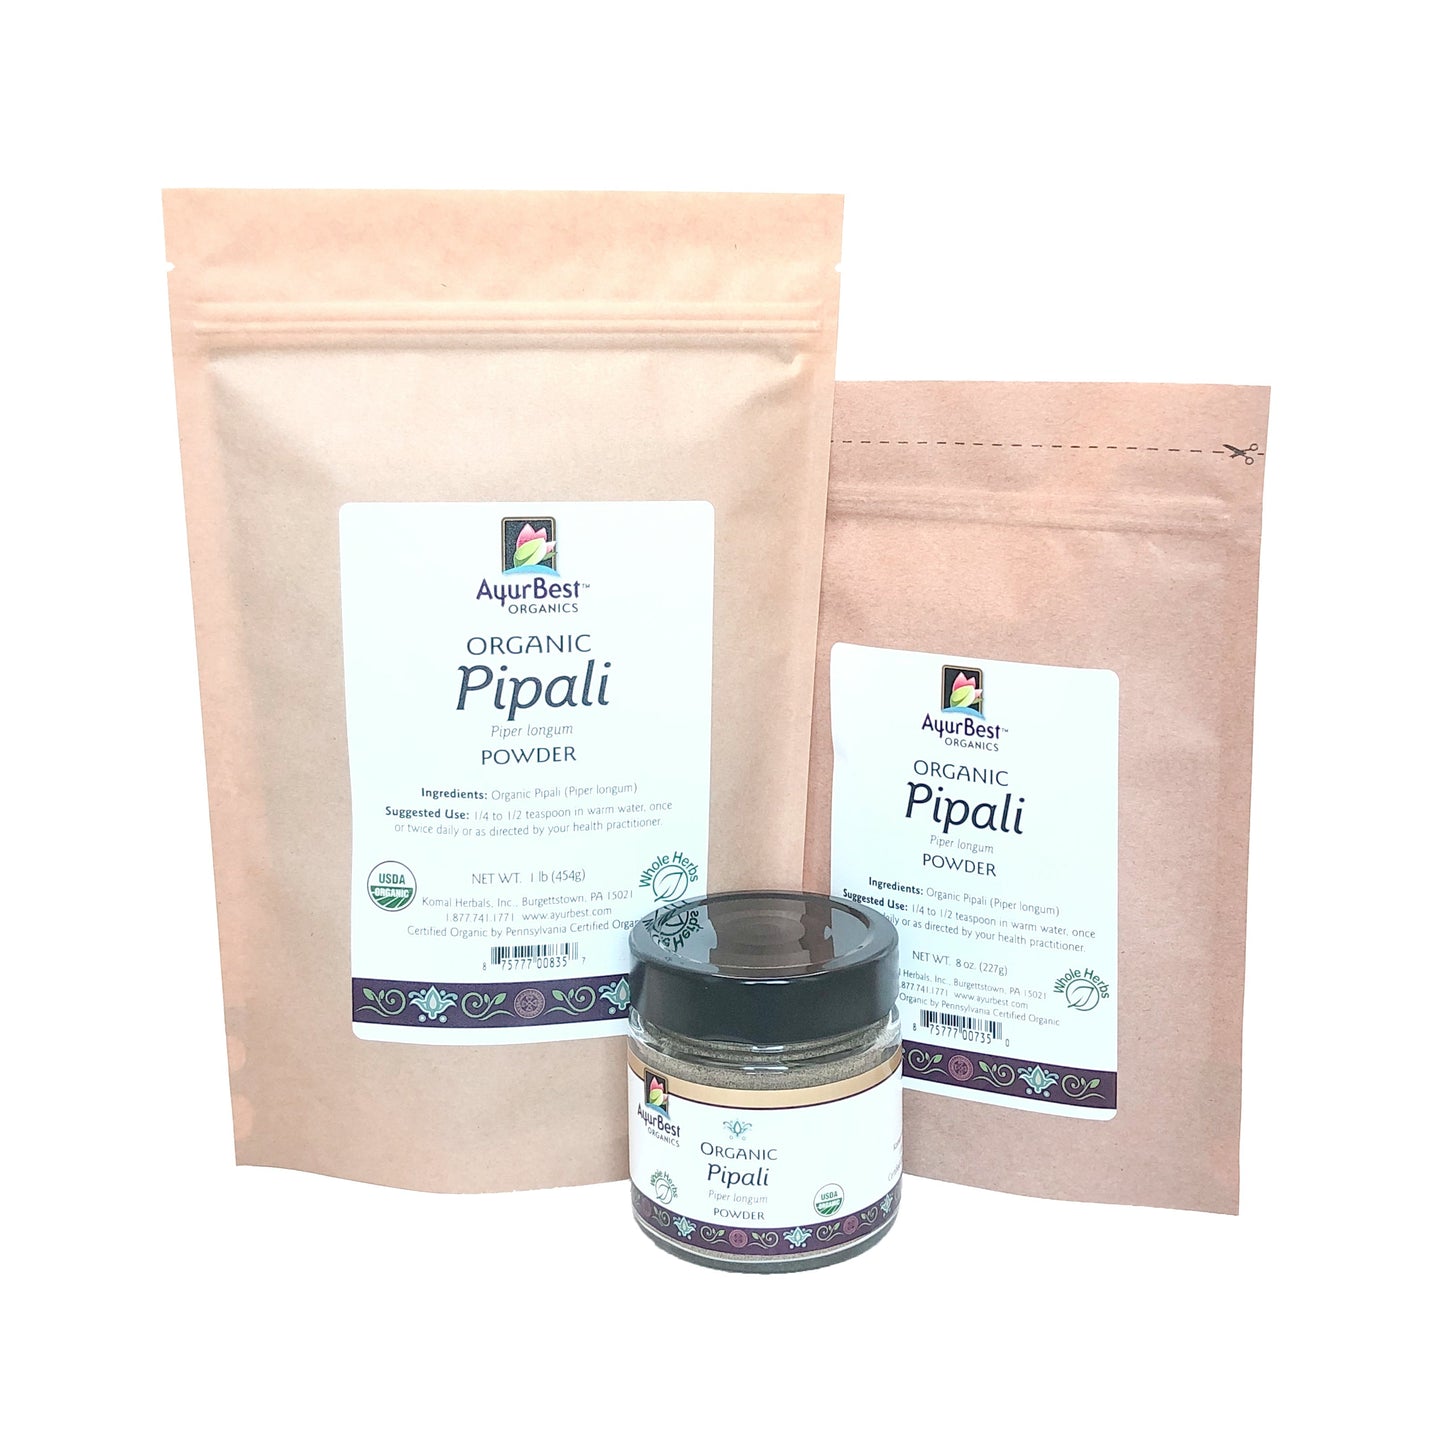 Wholesale Spices & Herbs - Pippali Powder, Organic 1lb (454g) Bag